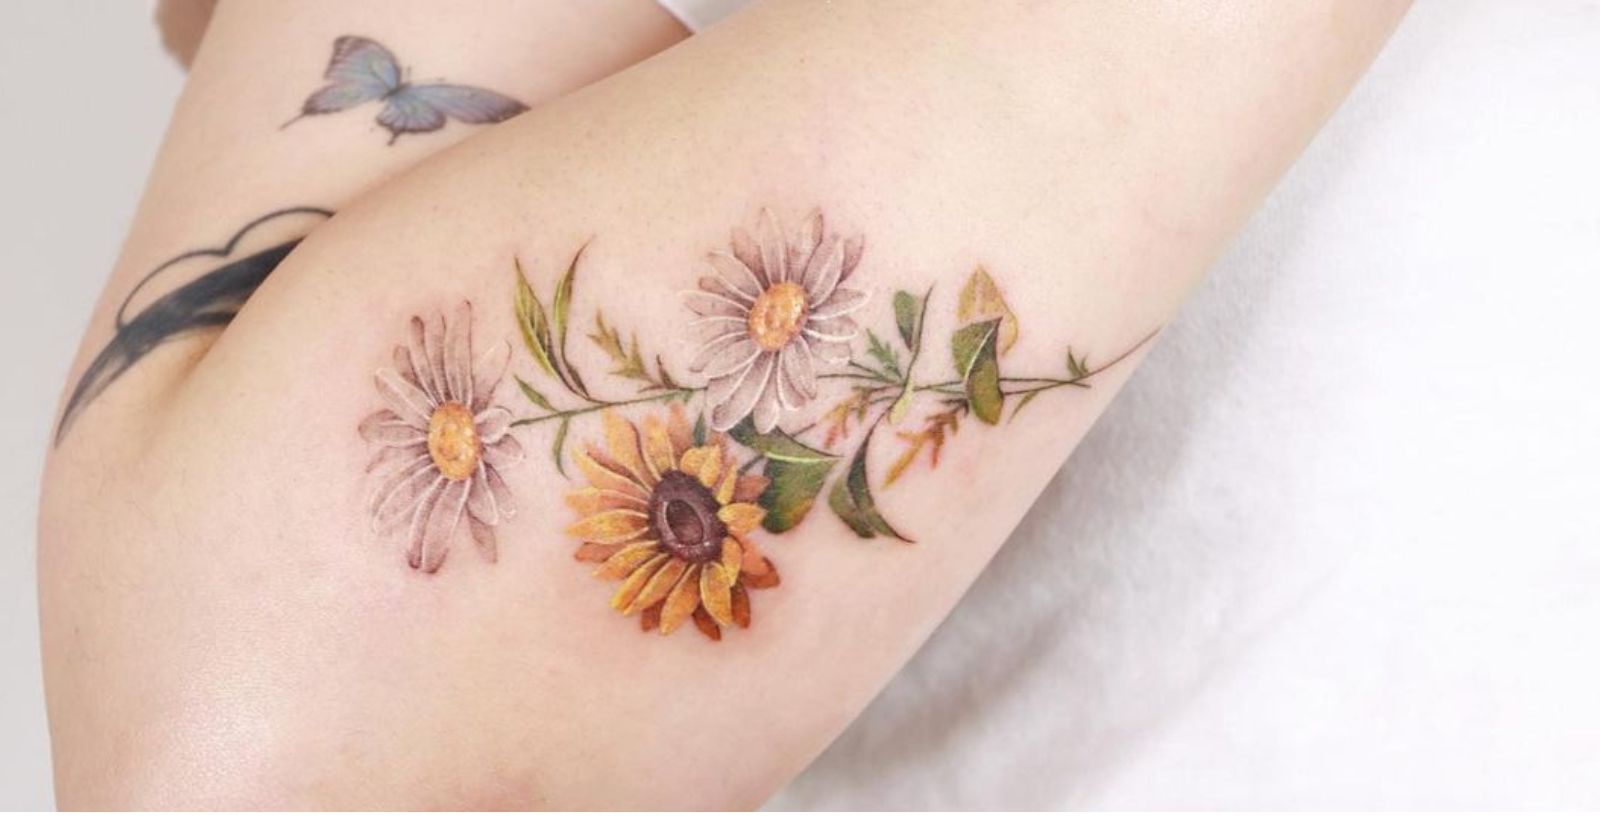 Firestarter Tattoos and Fine Art - Love me daisy~🌼🌿 . . . . #daisy # DaisyTattoo #ColorTattoo #pink #FineLineTattoo #flower #floral  #FloralTattoo #FlowerTattoo #plants #nature #tattoos #BodyArt #BodyMod  #modification #ink #art #QueerArtist ...